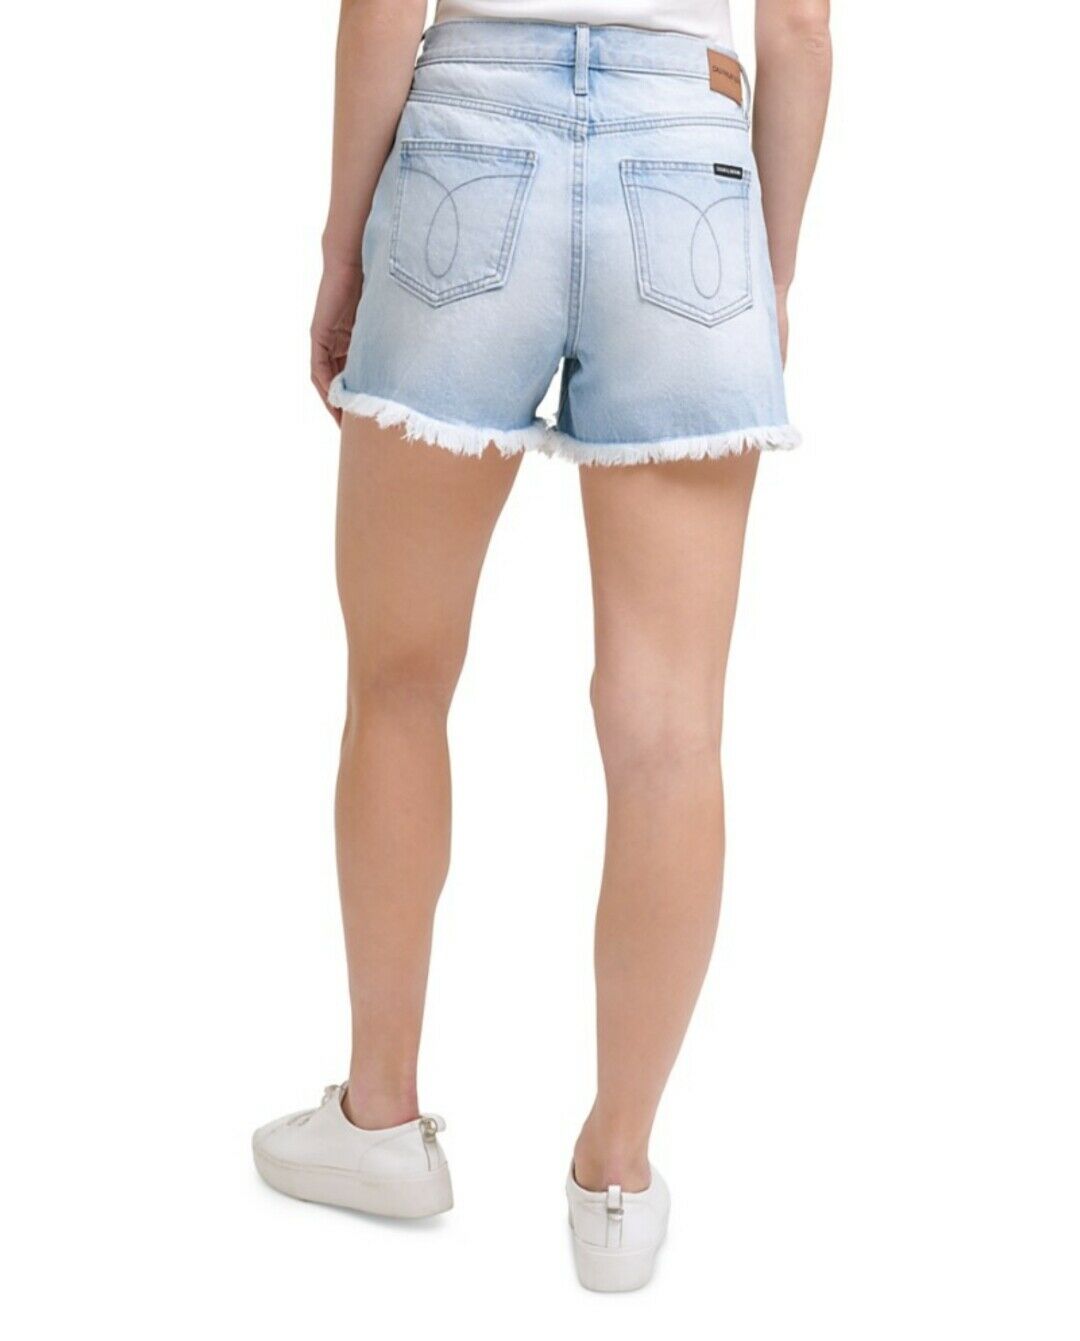 Juniors Cotton Frayed Denim Shorts High Rise